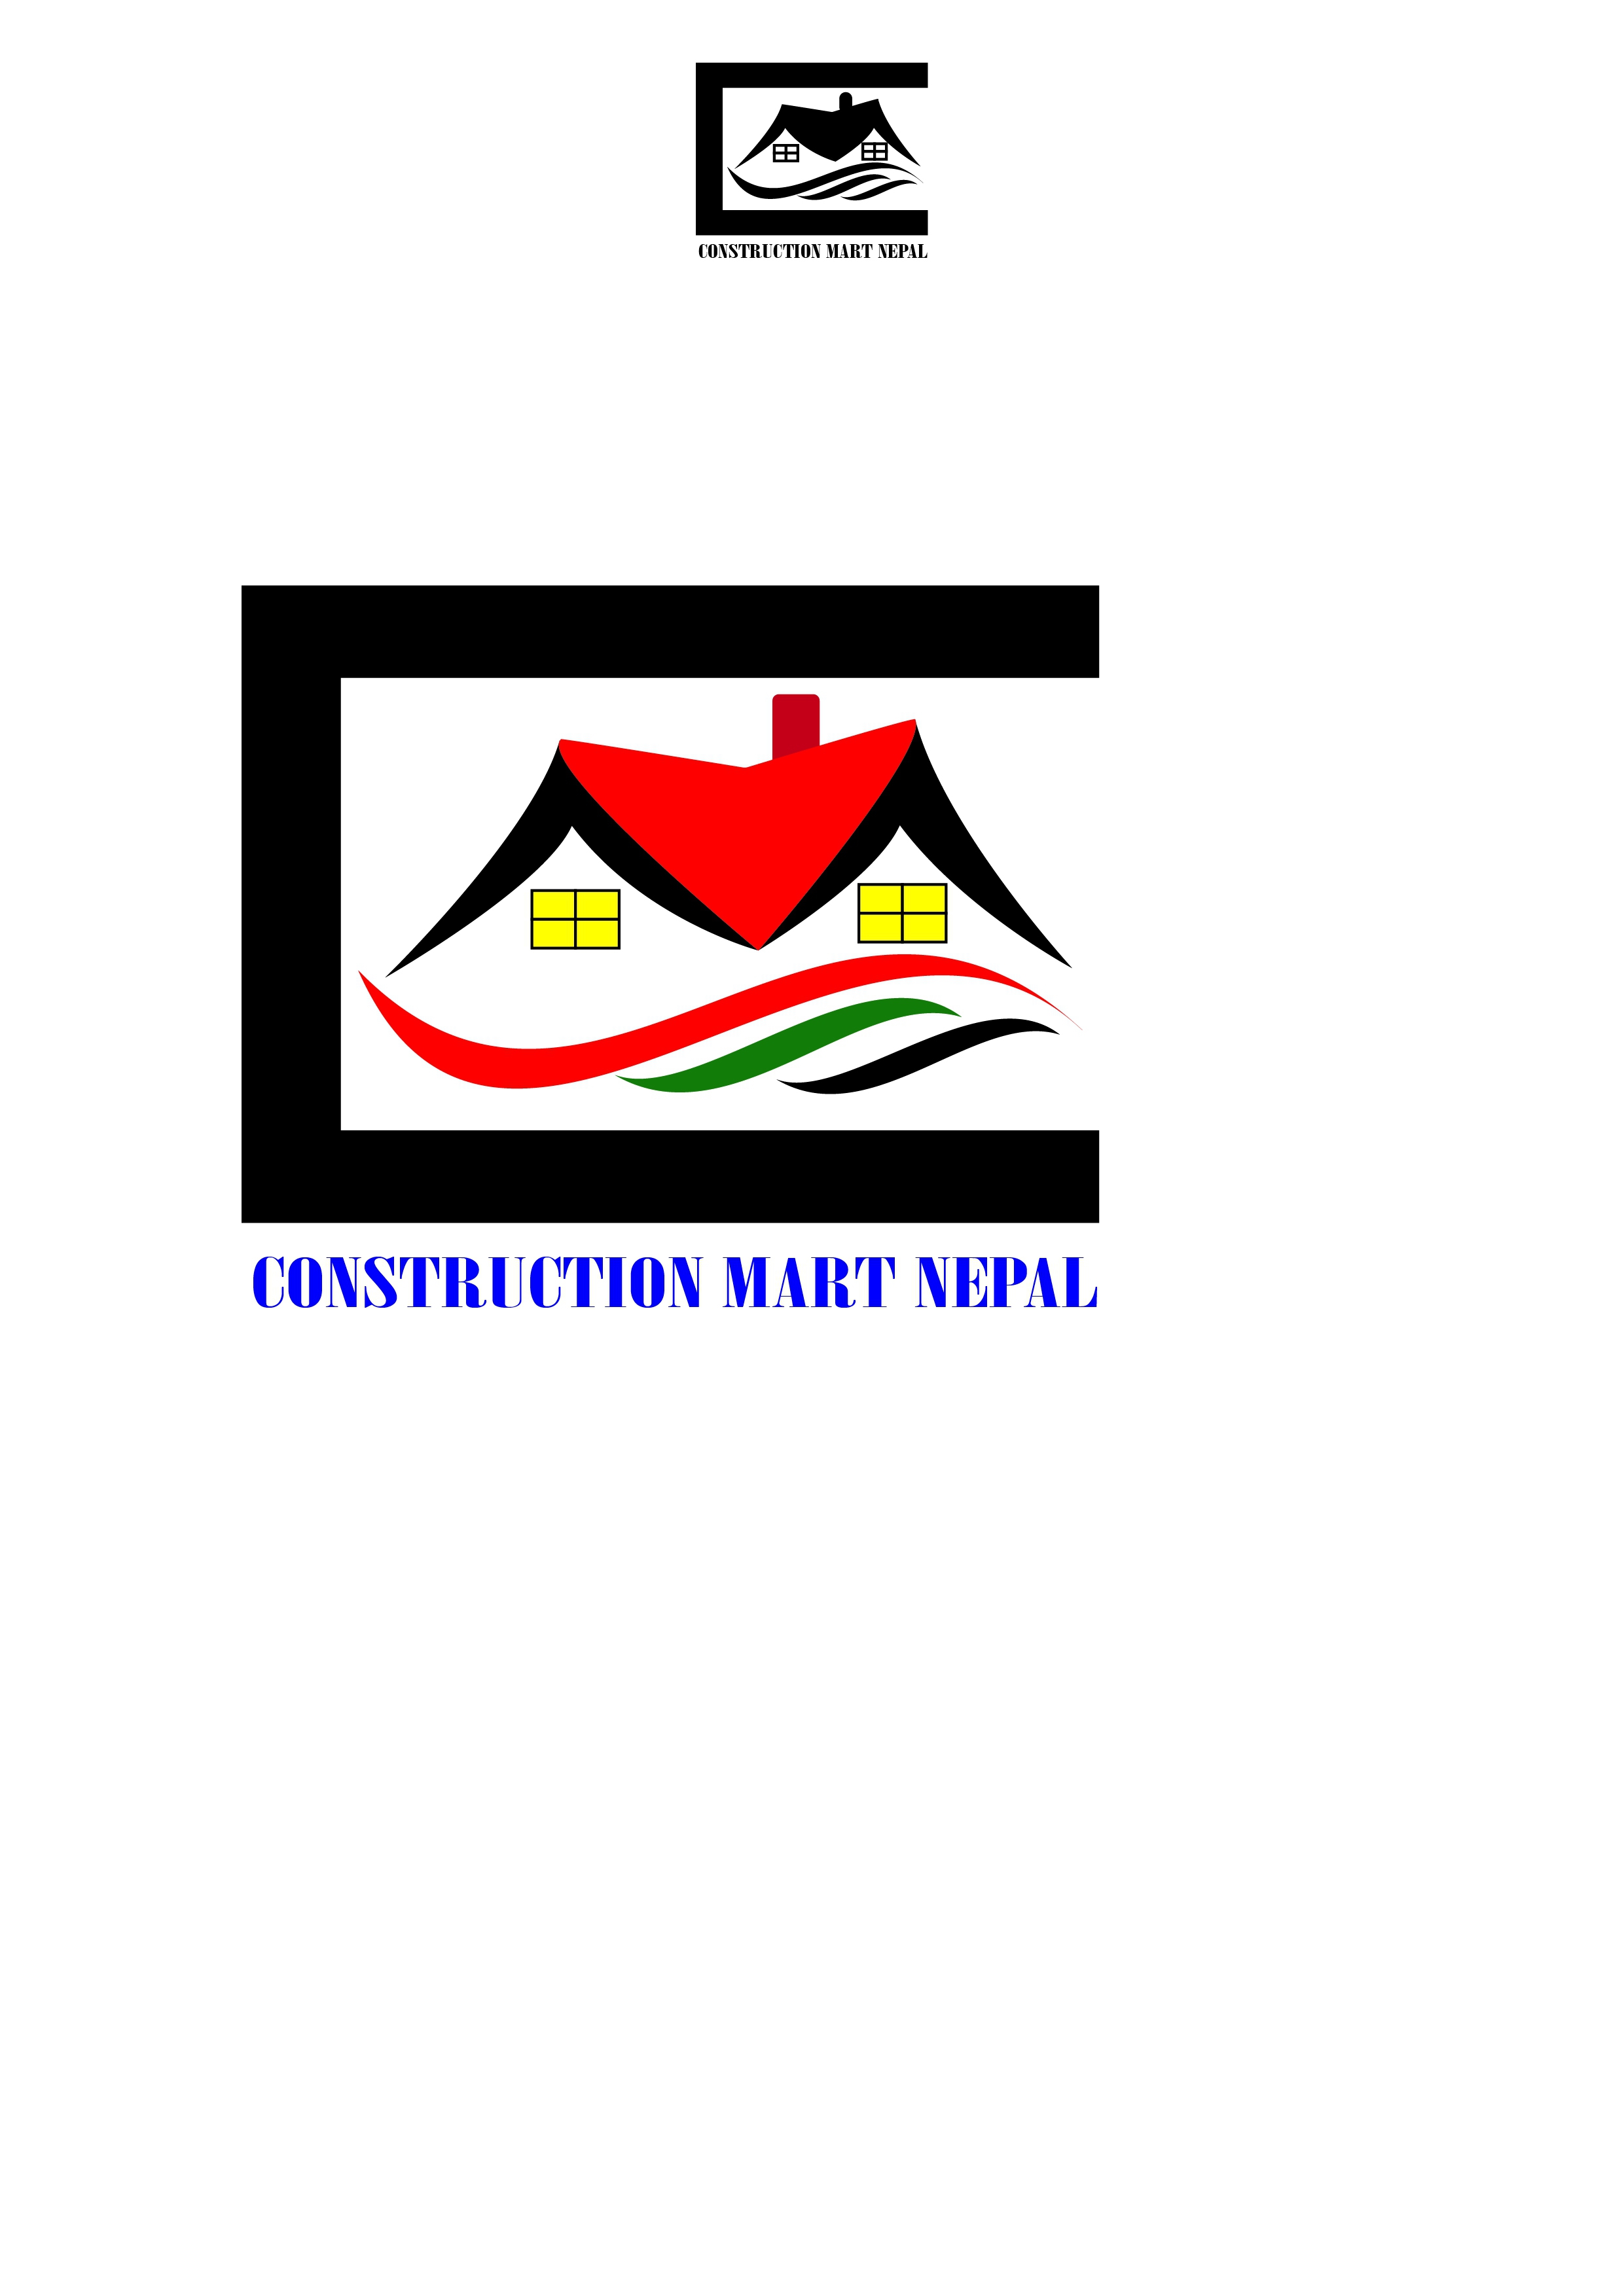 Construction Mart Nepal